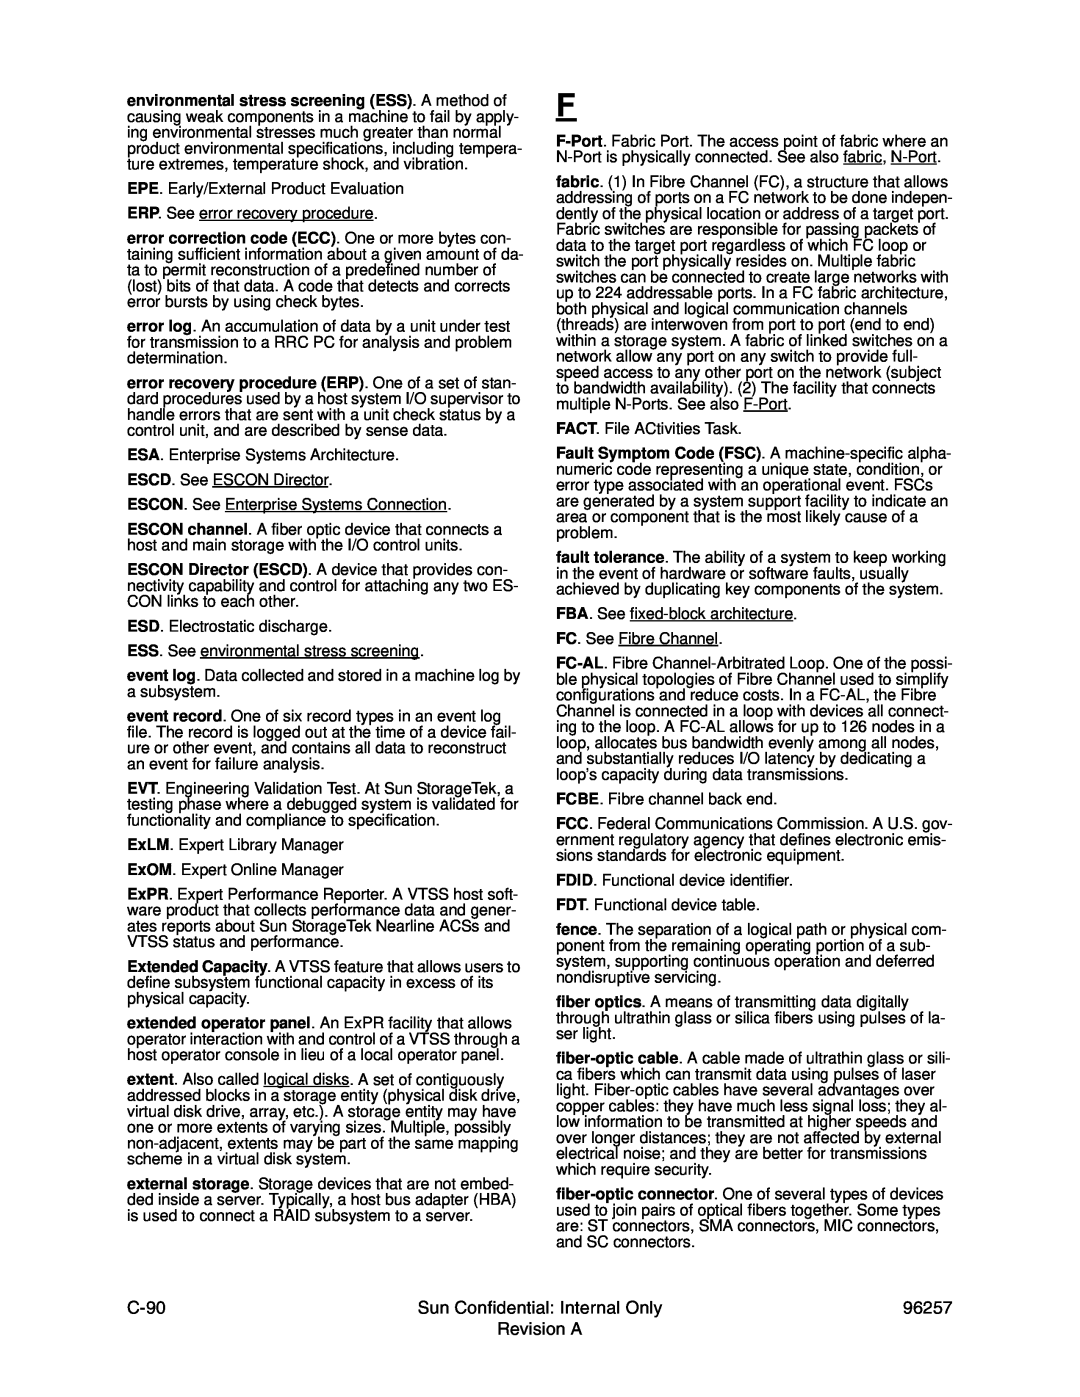 Sun Microsystems 96257 manual C-90, Sun Confidential Internal Only, Revision A 